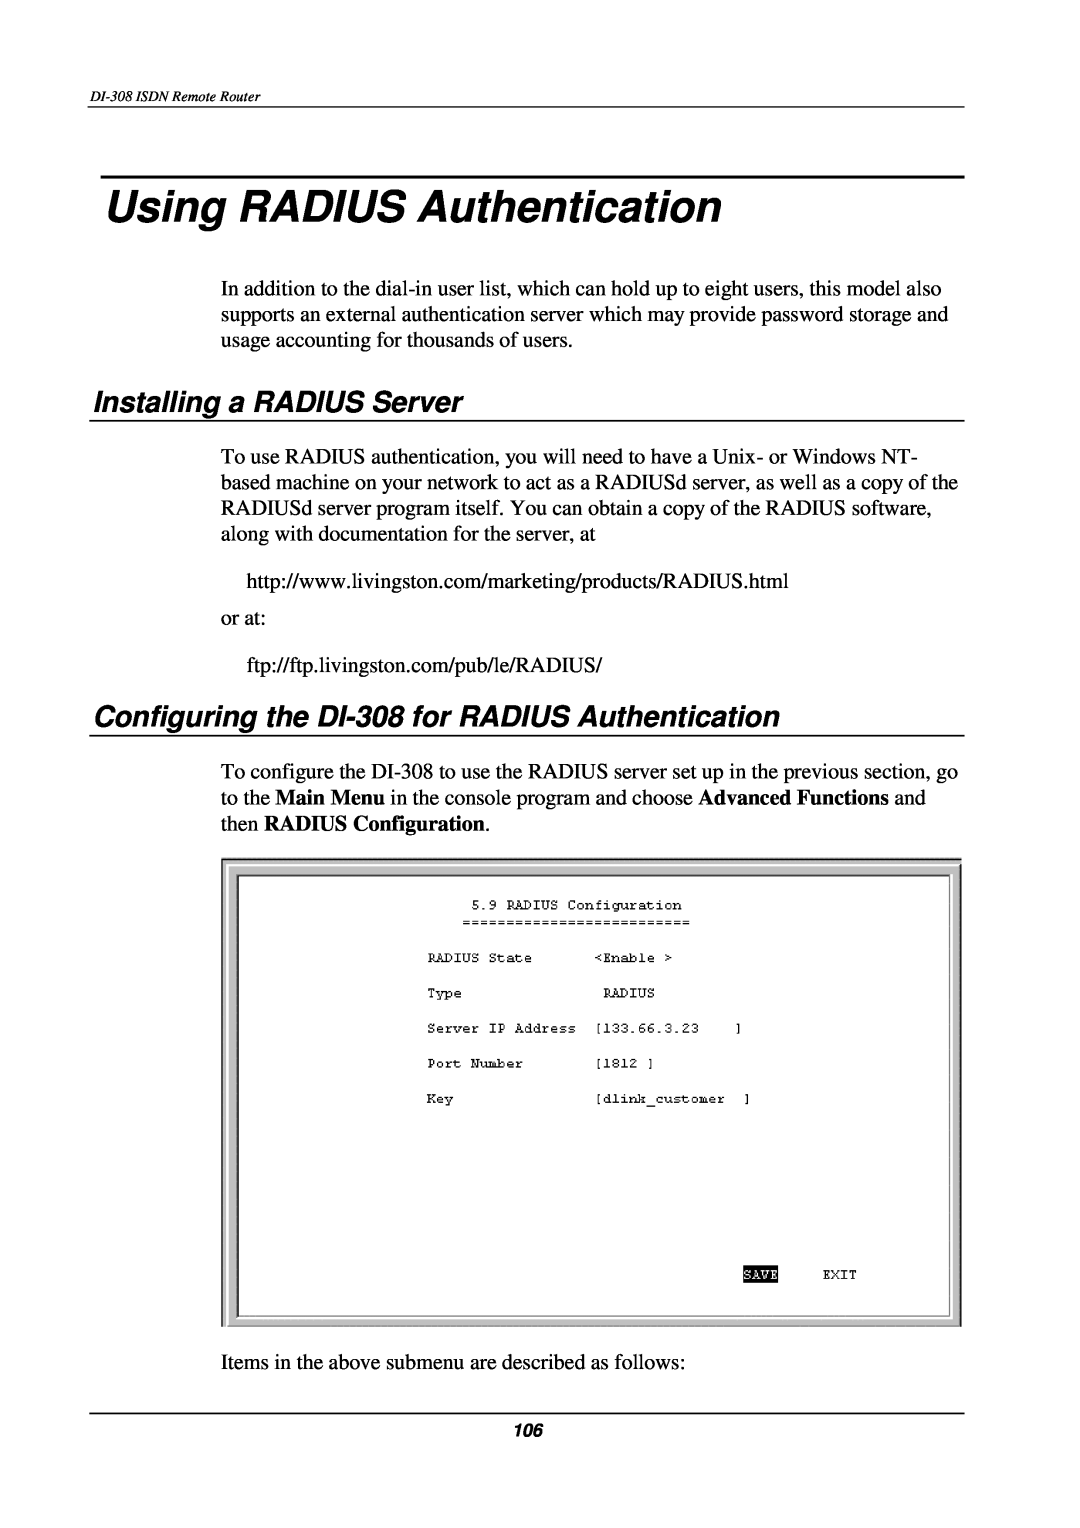 D-Link manual Using RADIUS Authentication, Installing a RADIUS Server, Configuring the DI-308 for RADIUS Authentication 